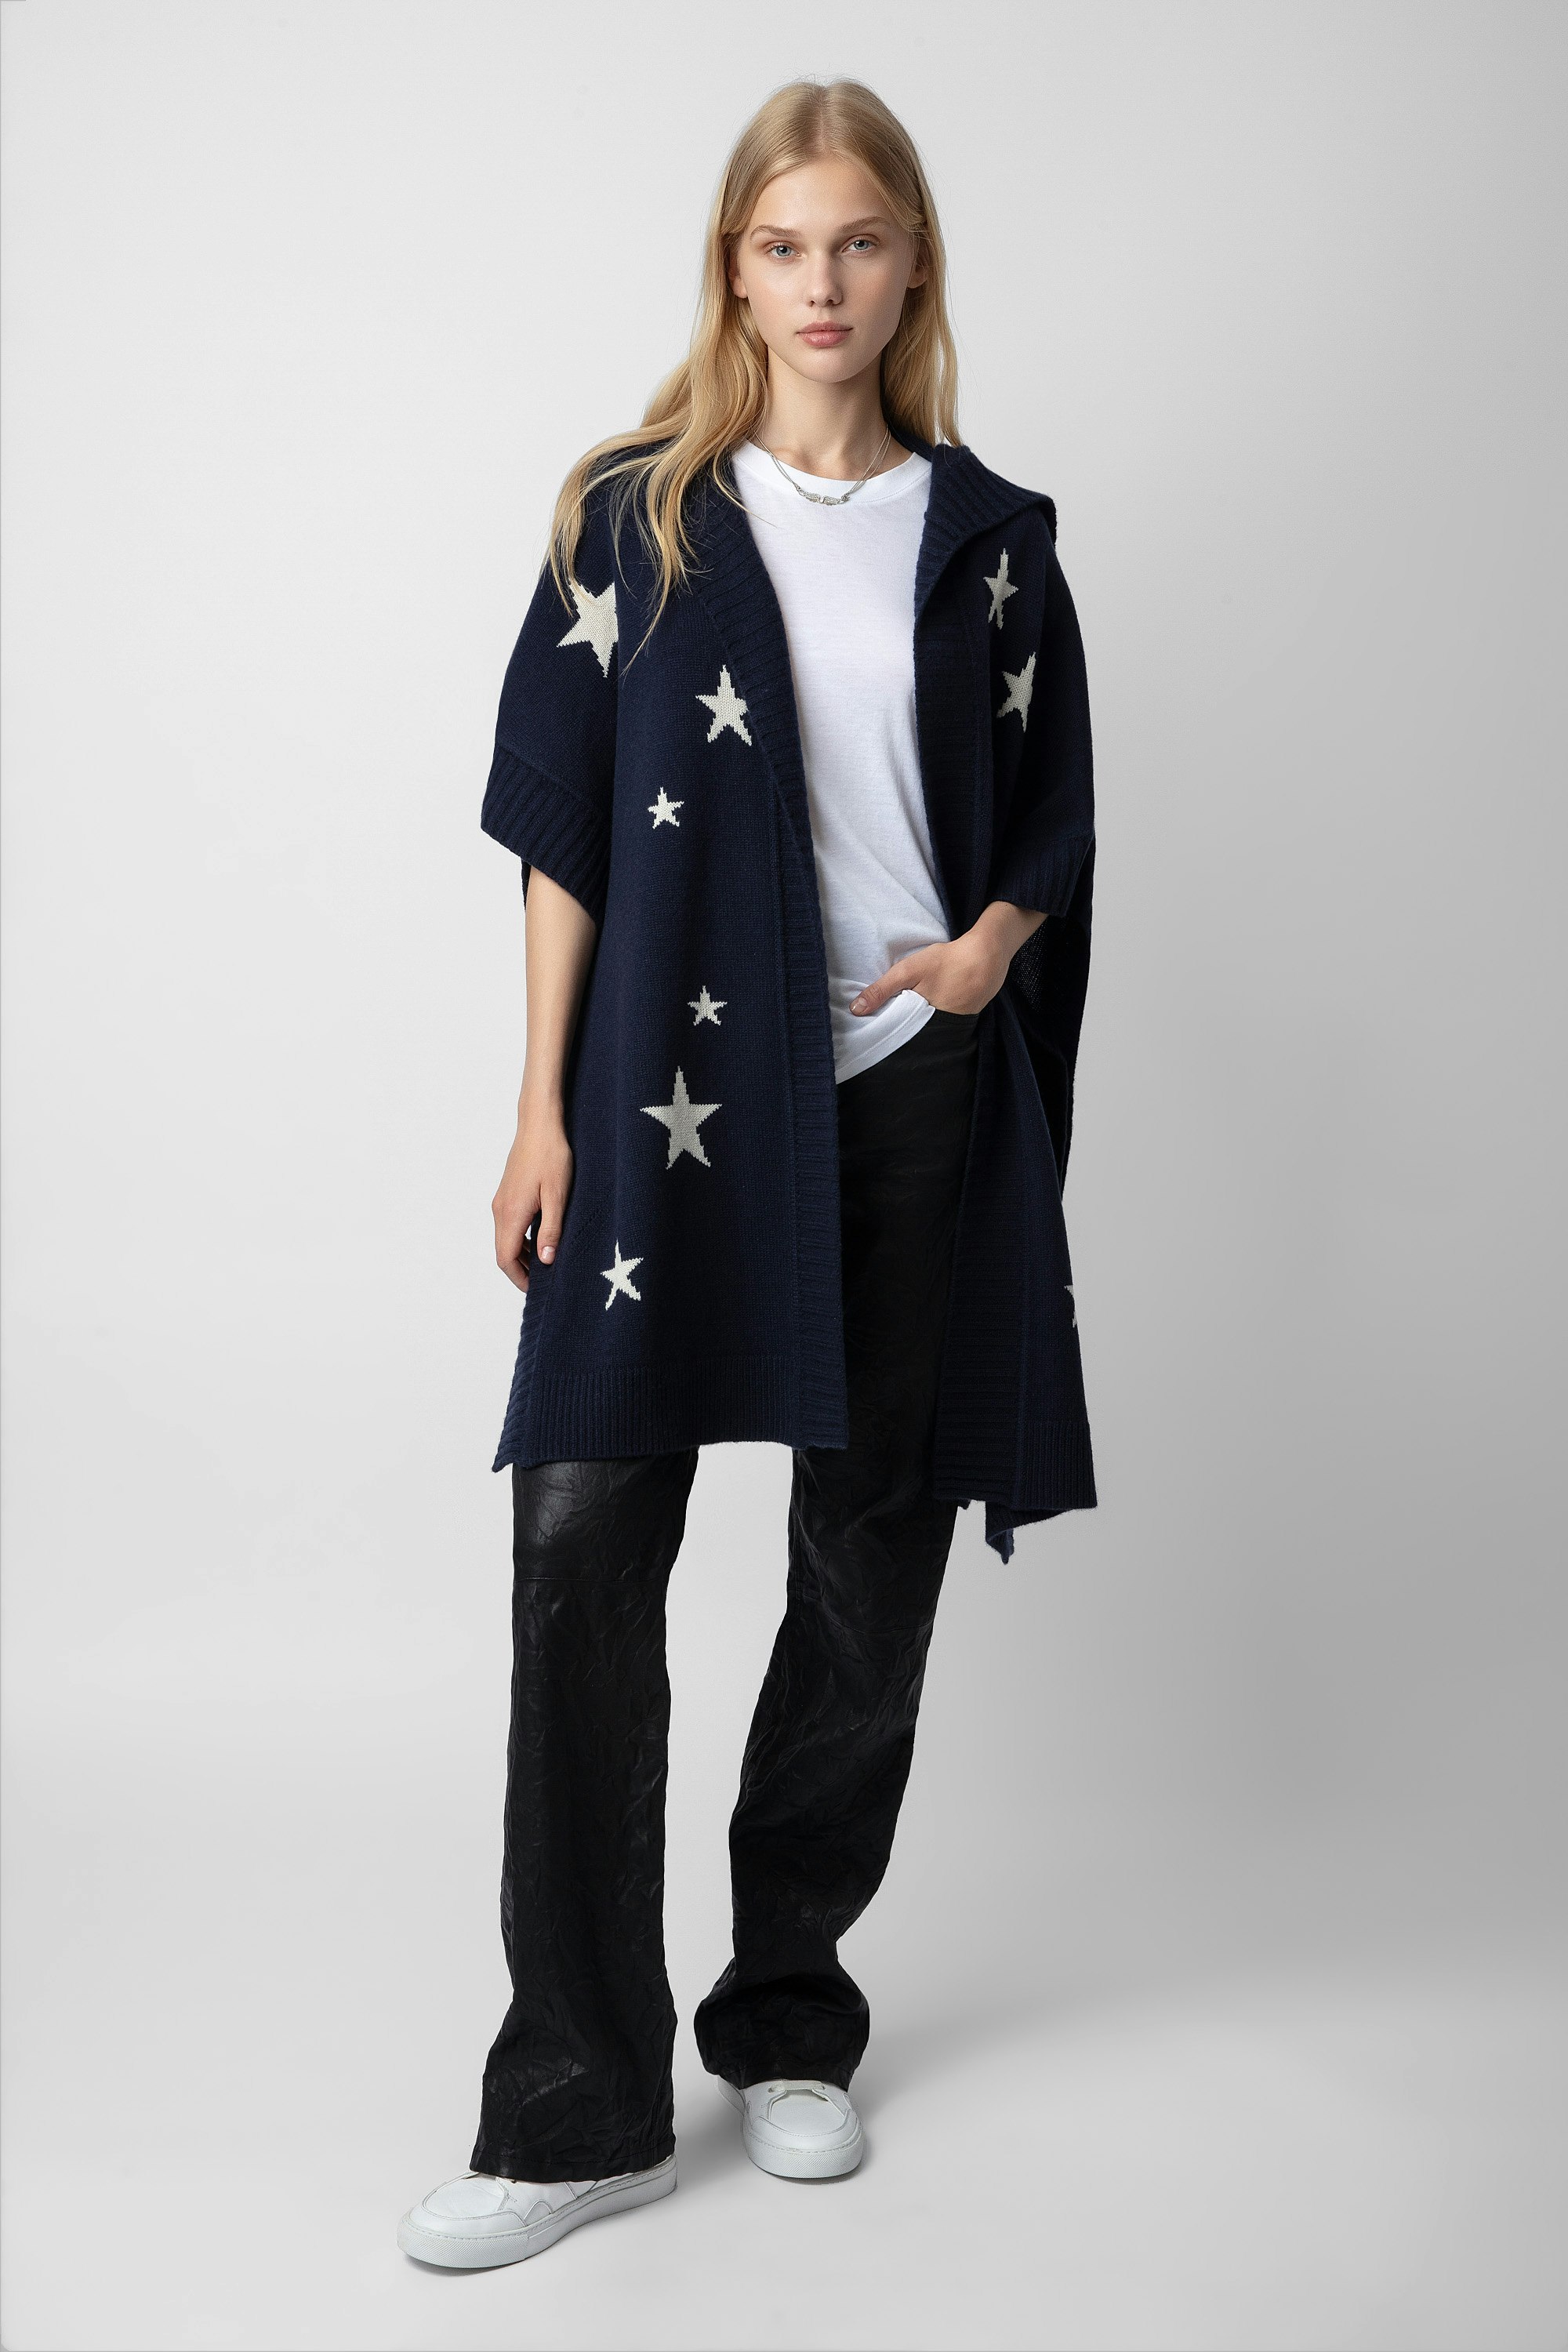 Inna Stars Cashmere Cardigan - Women’s long navy blue cashmere cardicoat with intarsia jacquard star motifs.